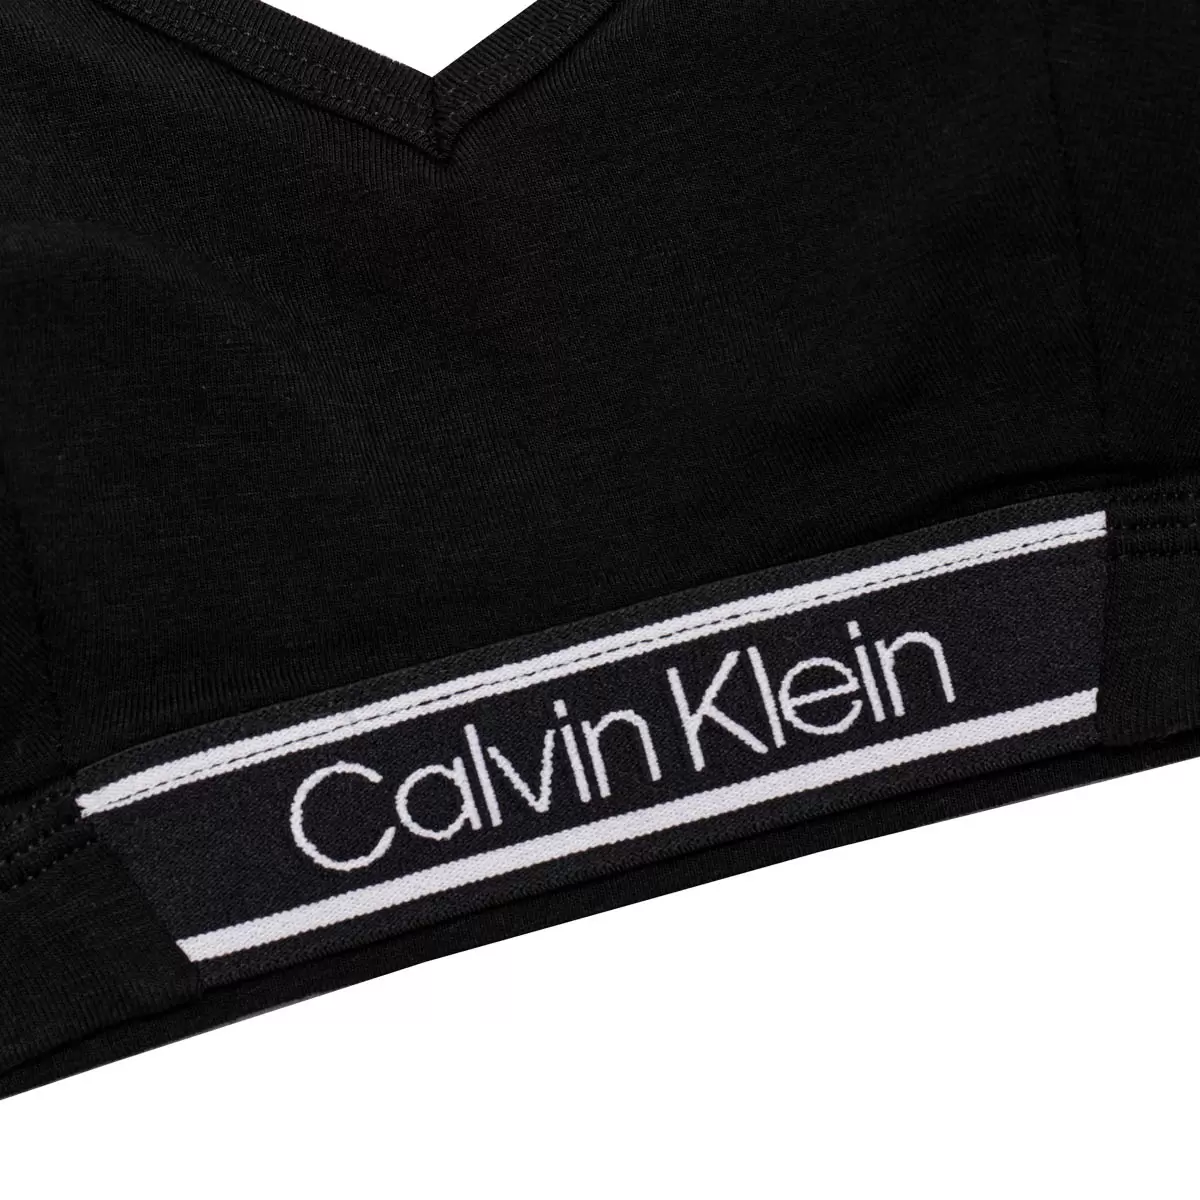 Calvin Klein 女無鋼圈內衣 兩件組 黑 / 藍